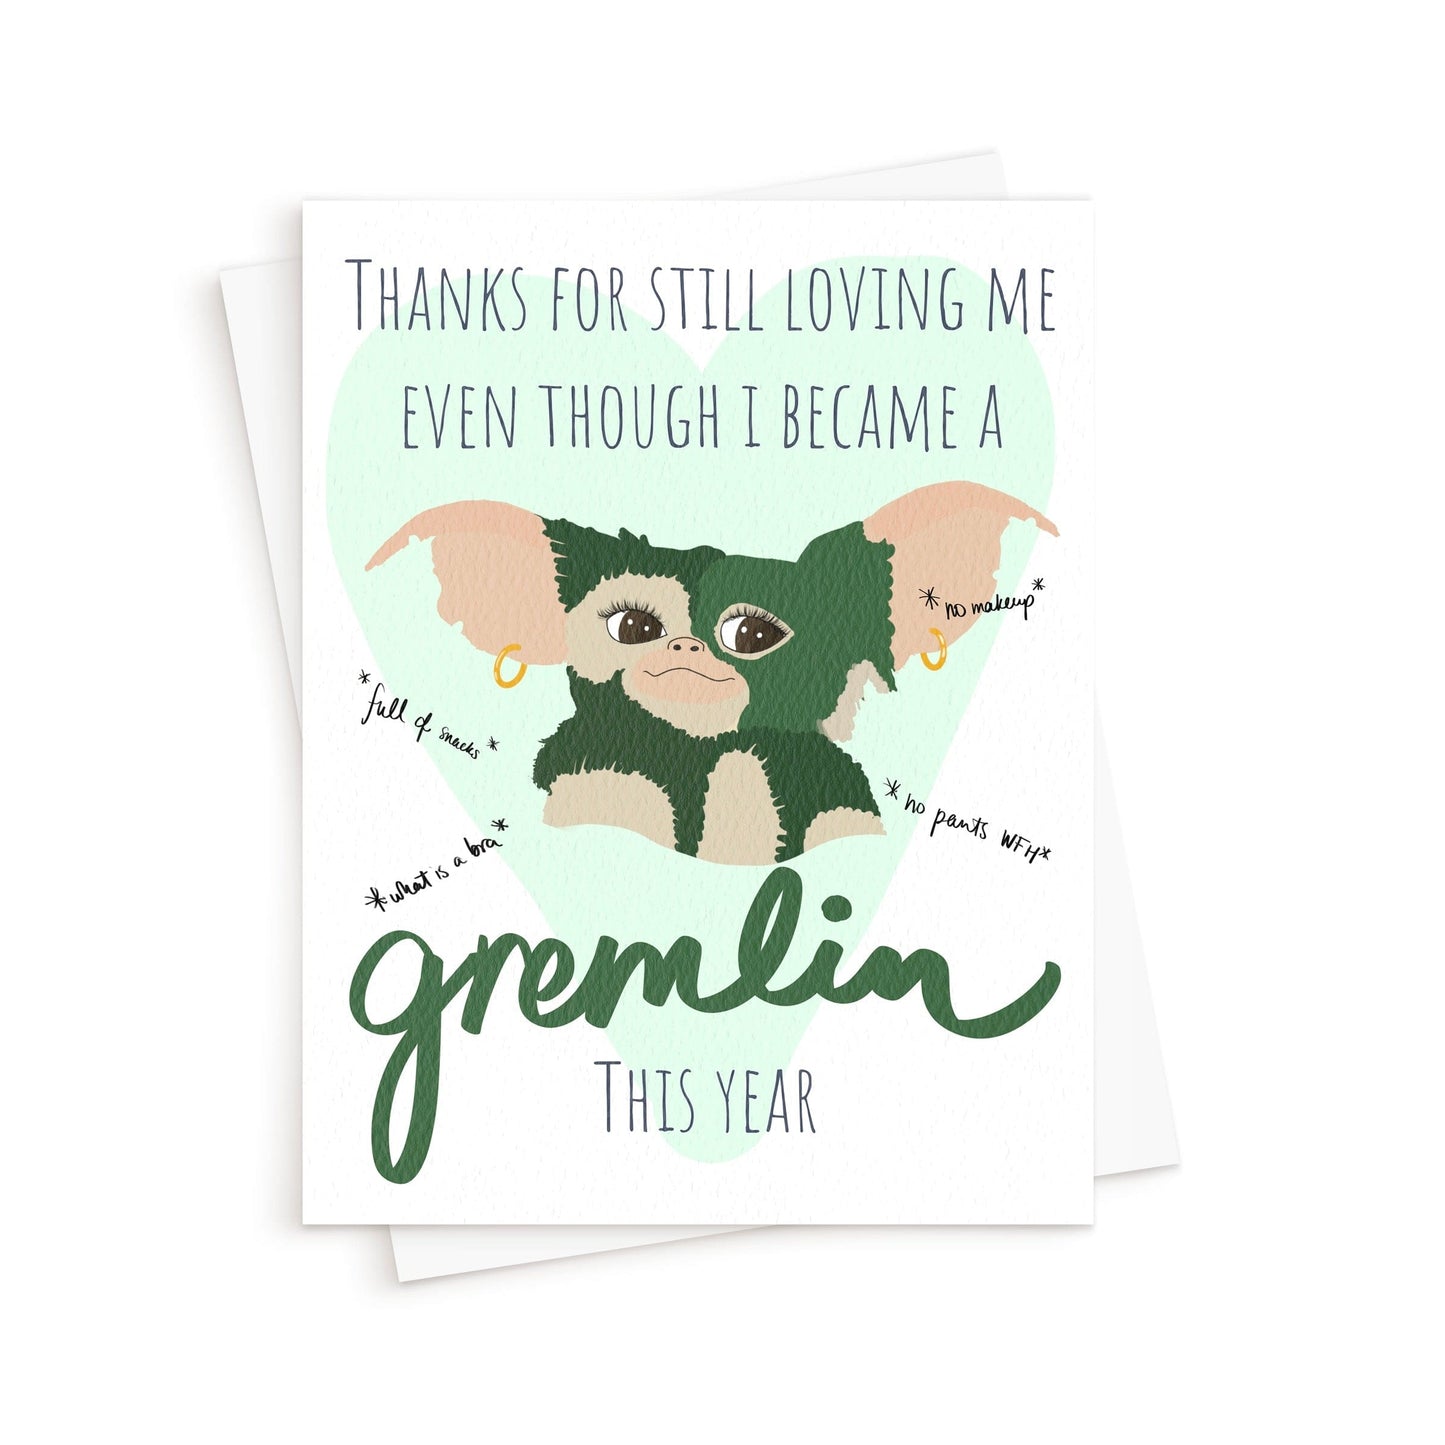 The Gremlin Card. Handmade greeting cards.